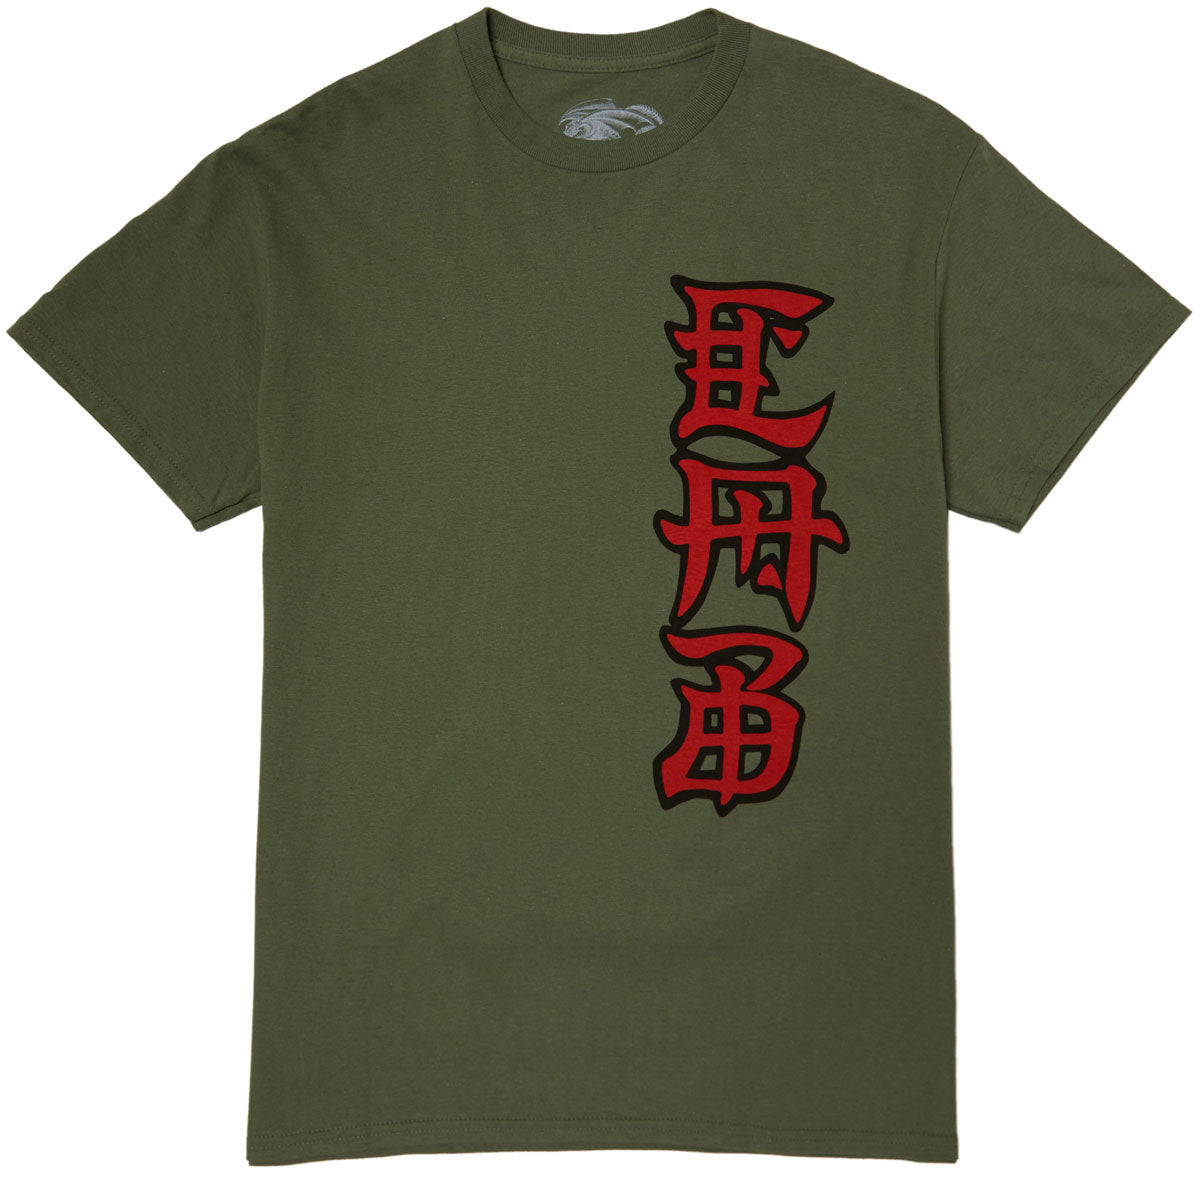 Powell-Peralta Steve Caballero Ban This T-Shirt - Military Green 2 image 2